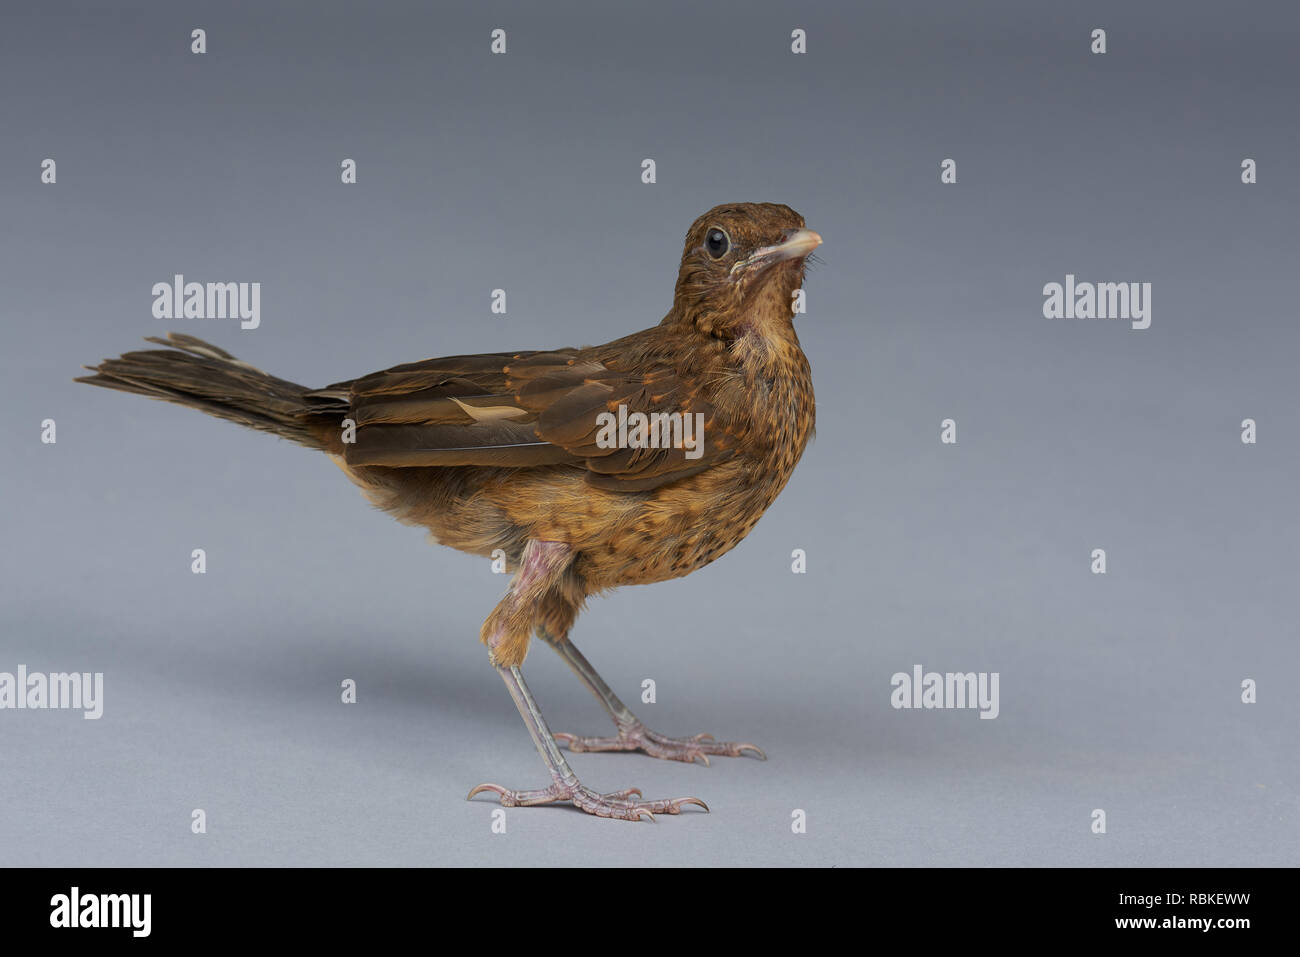 Brown trush bird look in camera standing on gray studio background Stock Photo